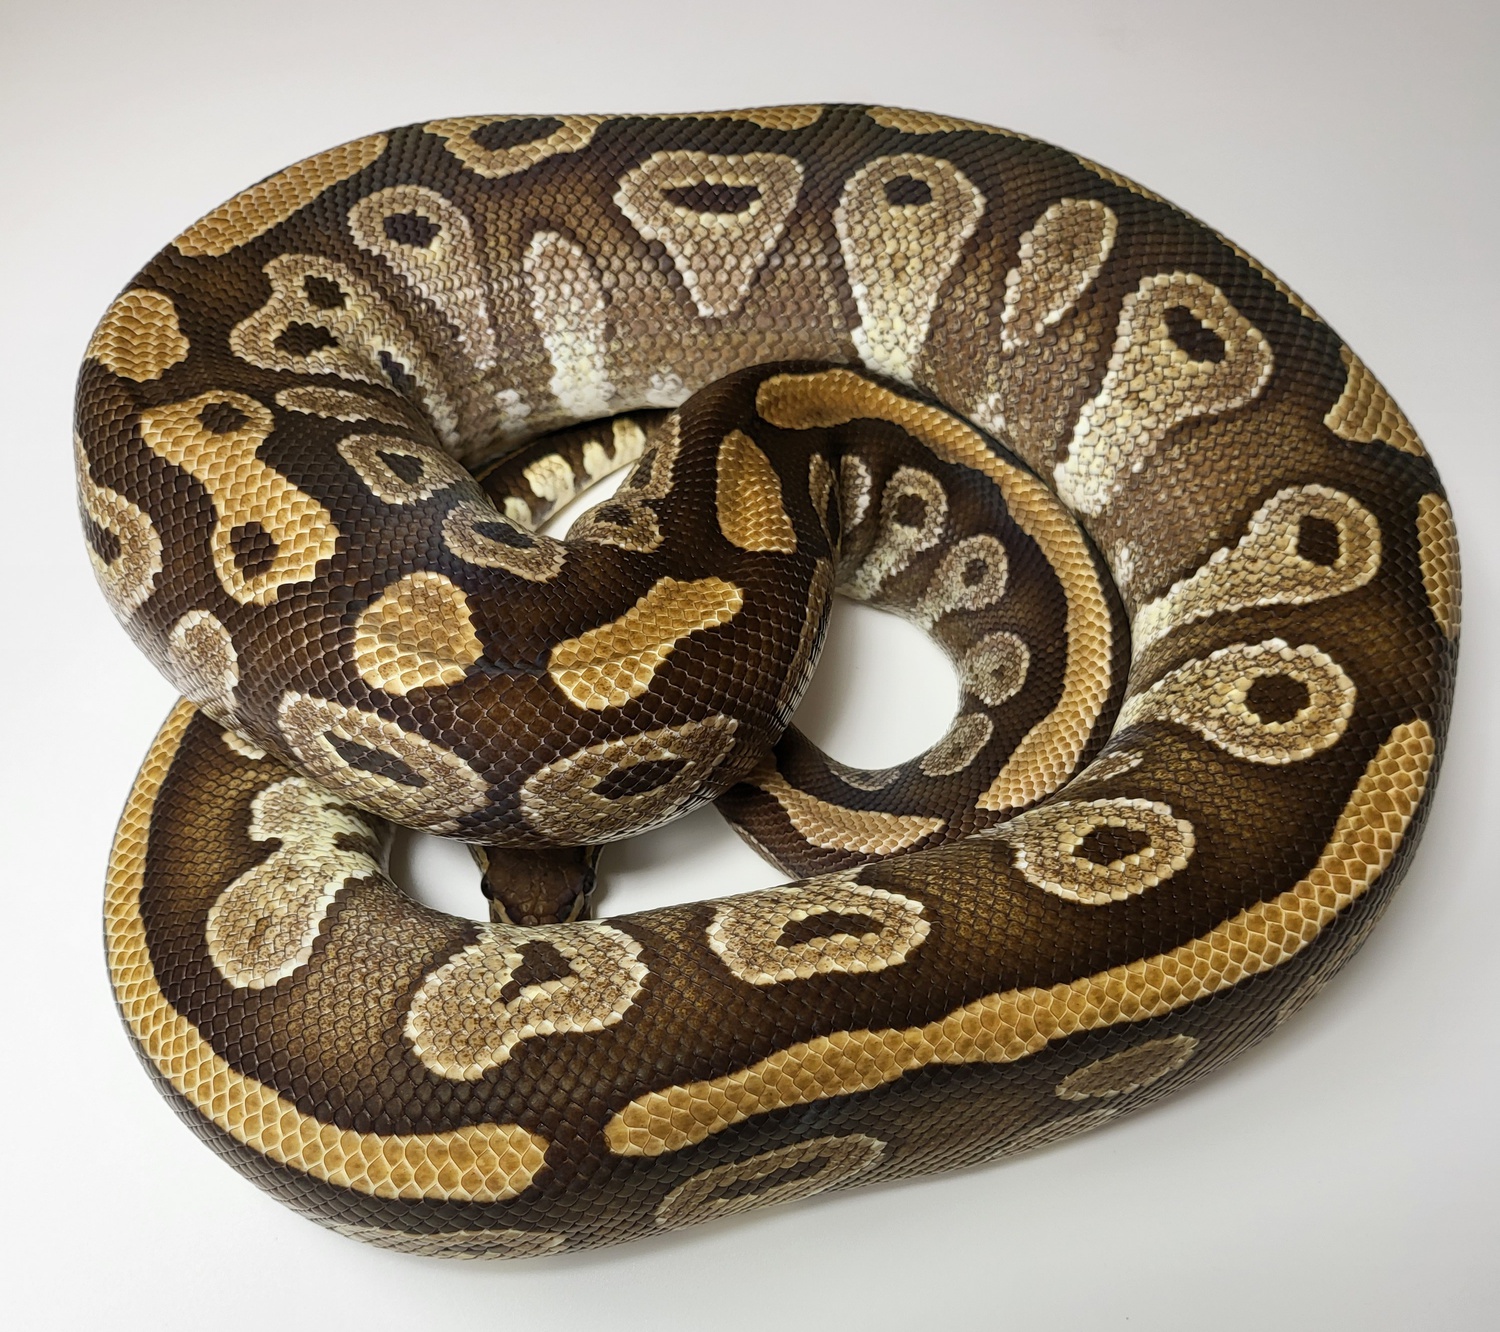 Mojave Ball Python by Image Reptiles